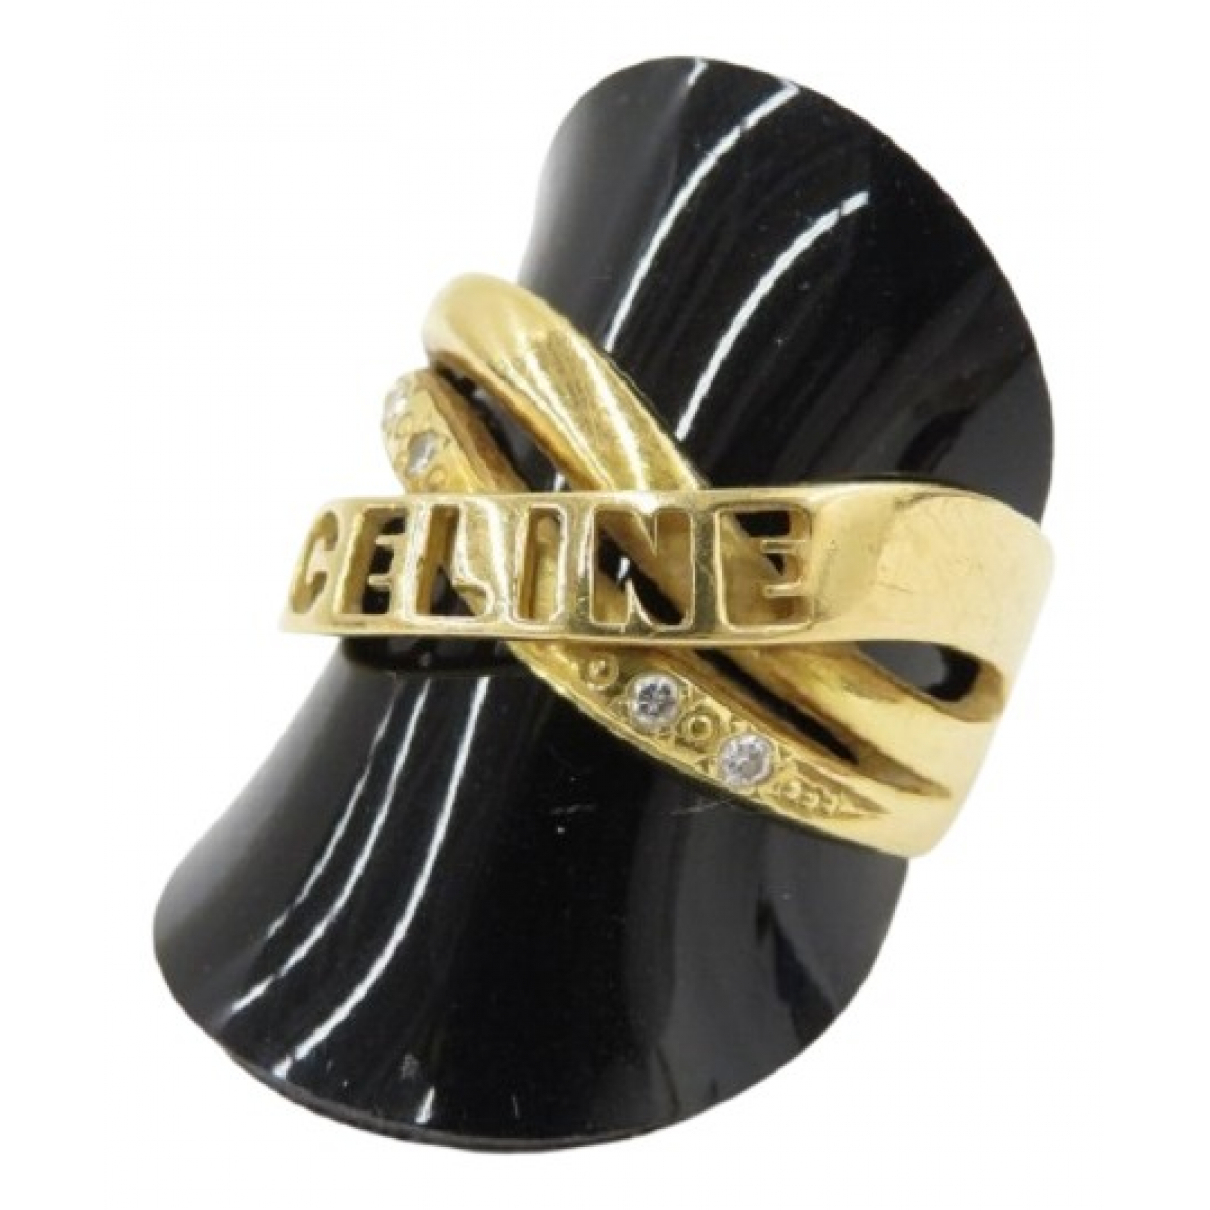 image of Celine Crystal ring